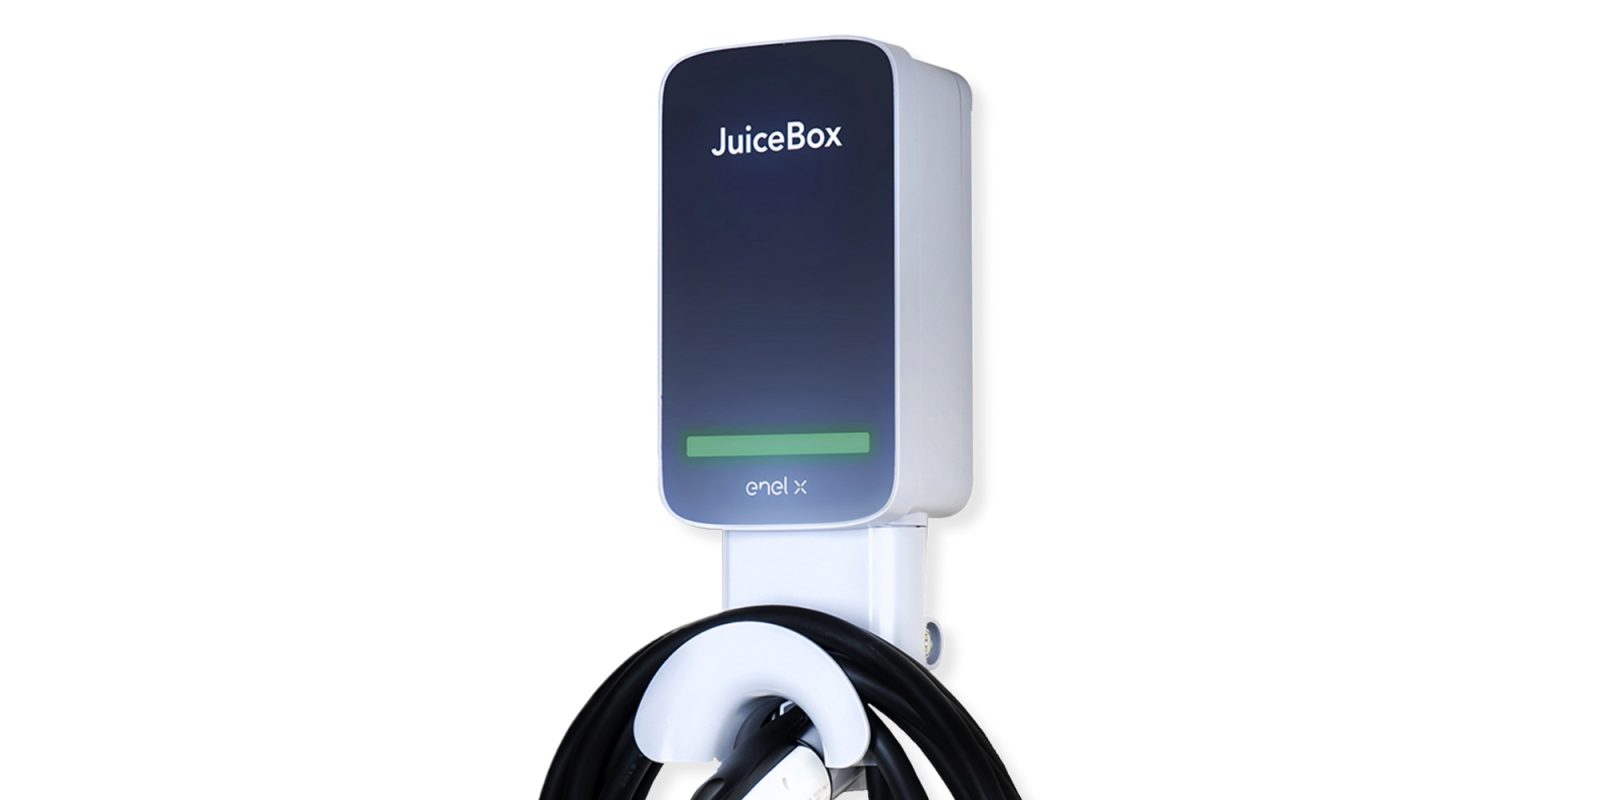 juicebox level 2 tesla charger hits $479, huffy folding e-bike $288, more